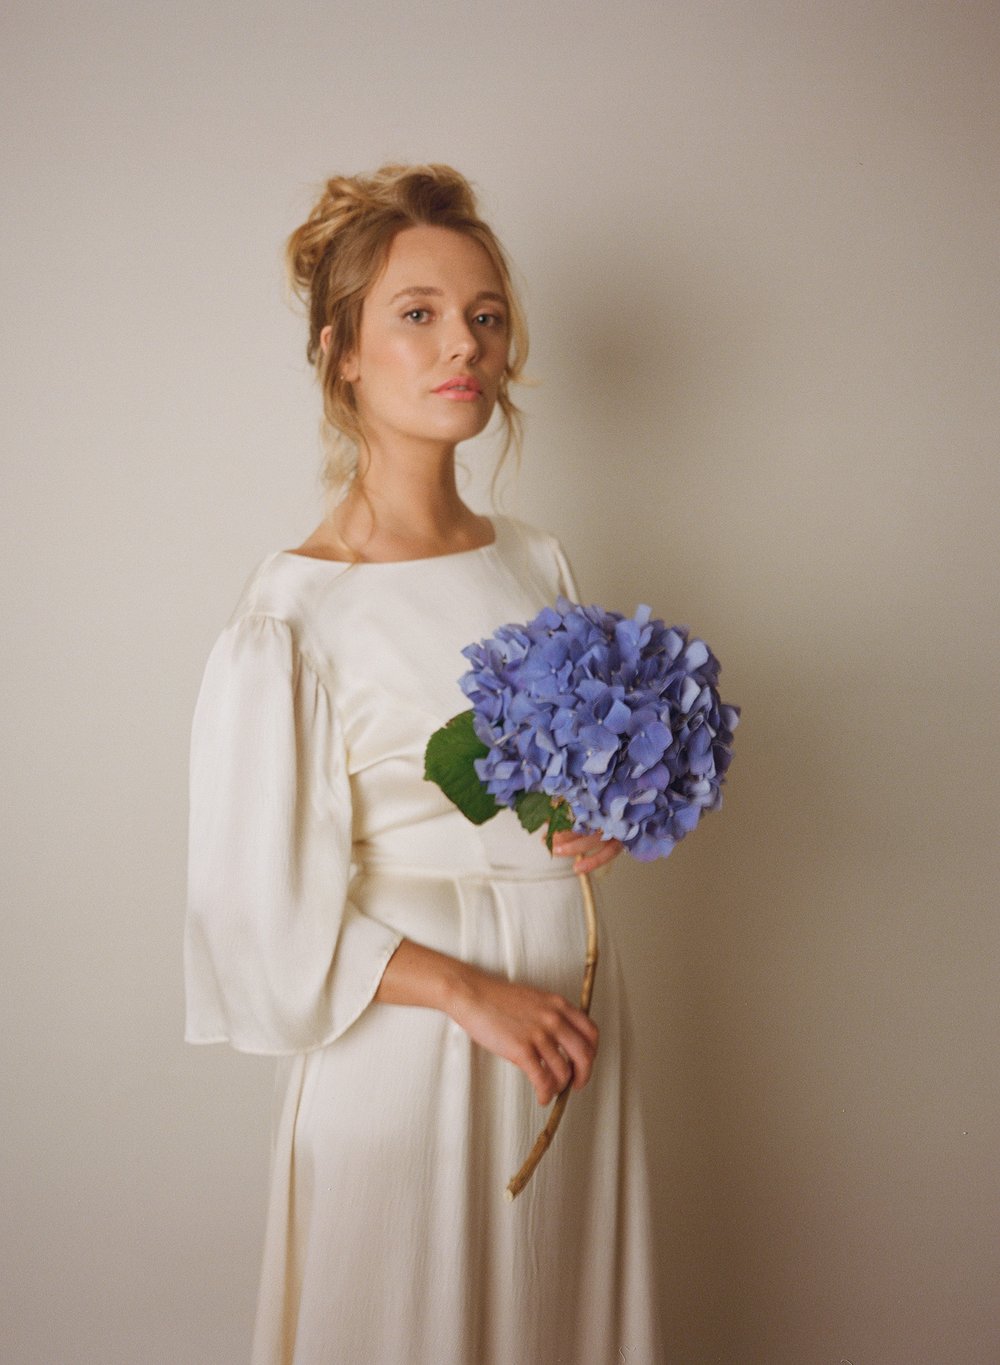 Analogue-shoot-Hollie-Cornish-photographer-Kate-Beaumont-wedding-gowns-Sheffield-62.jpg